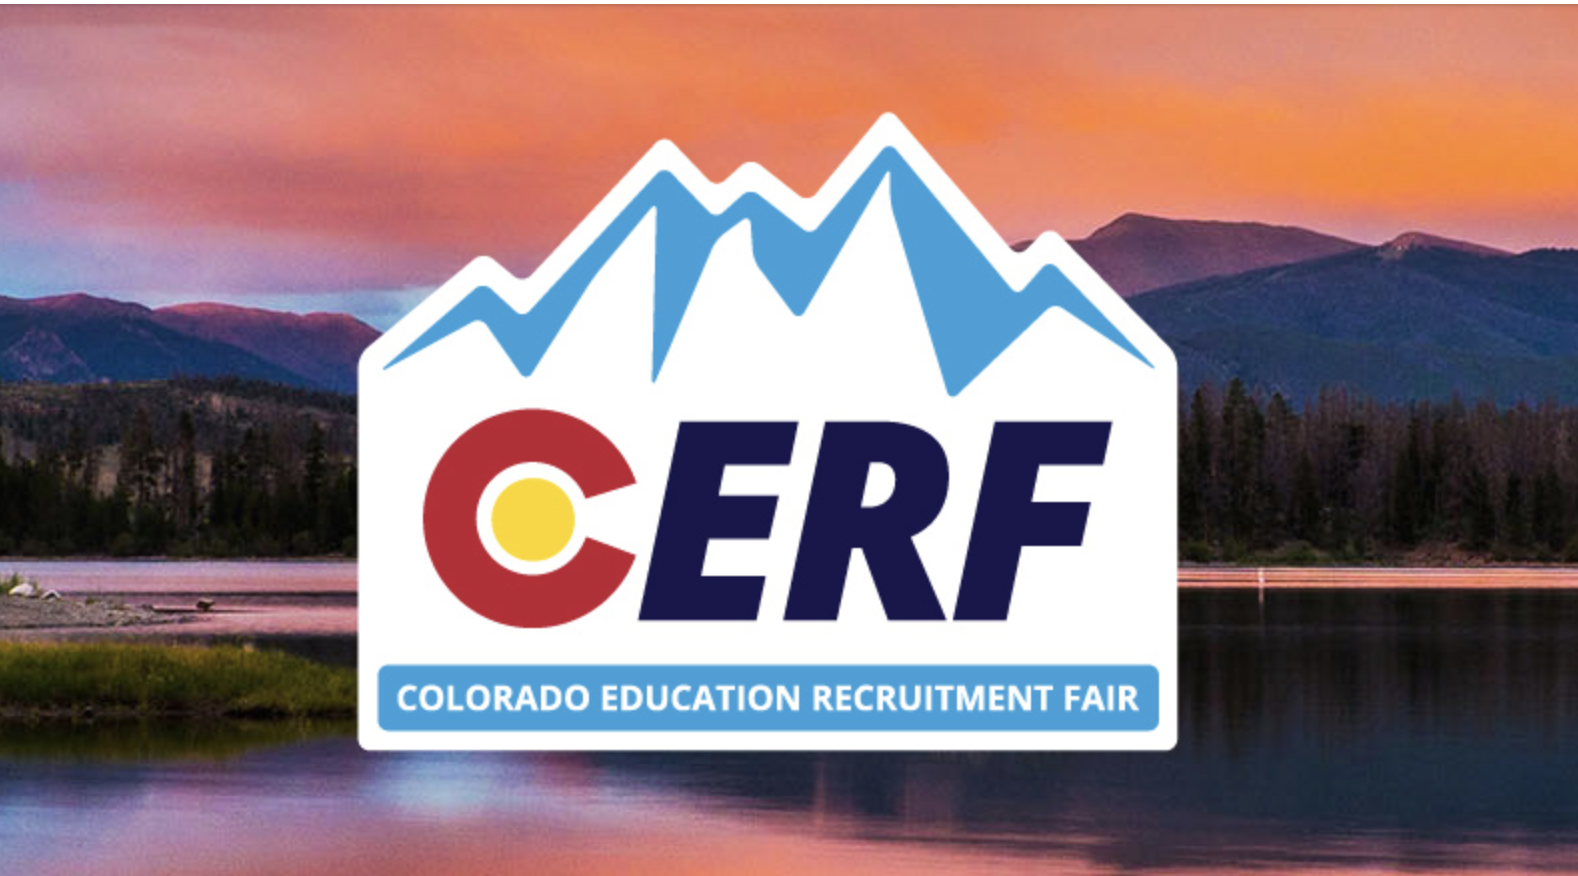 Colorado Education Recruitment Fair (CERF) University Honors and